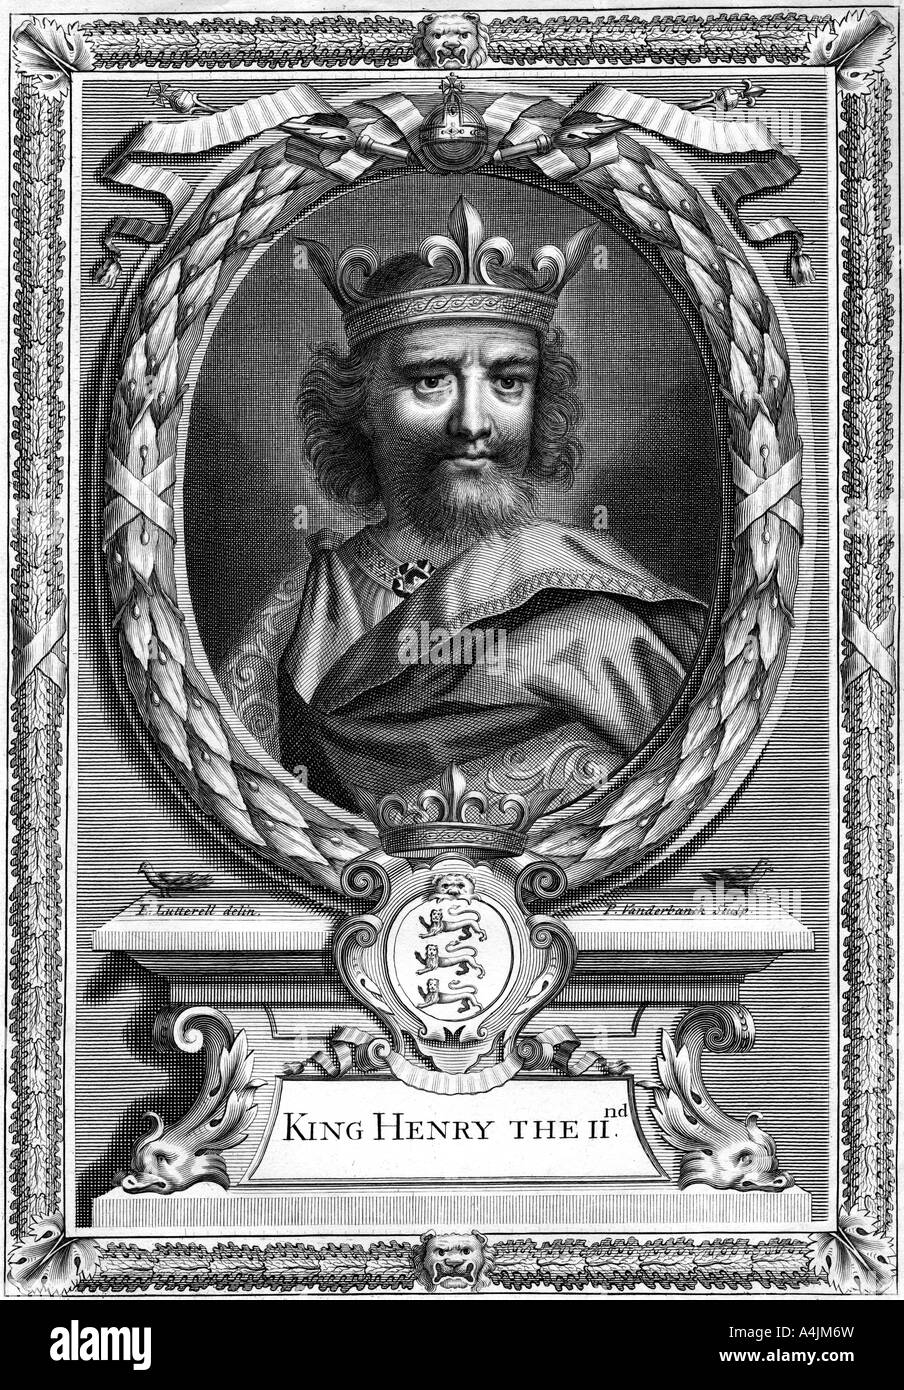 Enrico II, re d'Inghilterra.Artista: P Vanderbanck Foto Stock